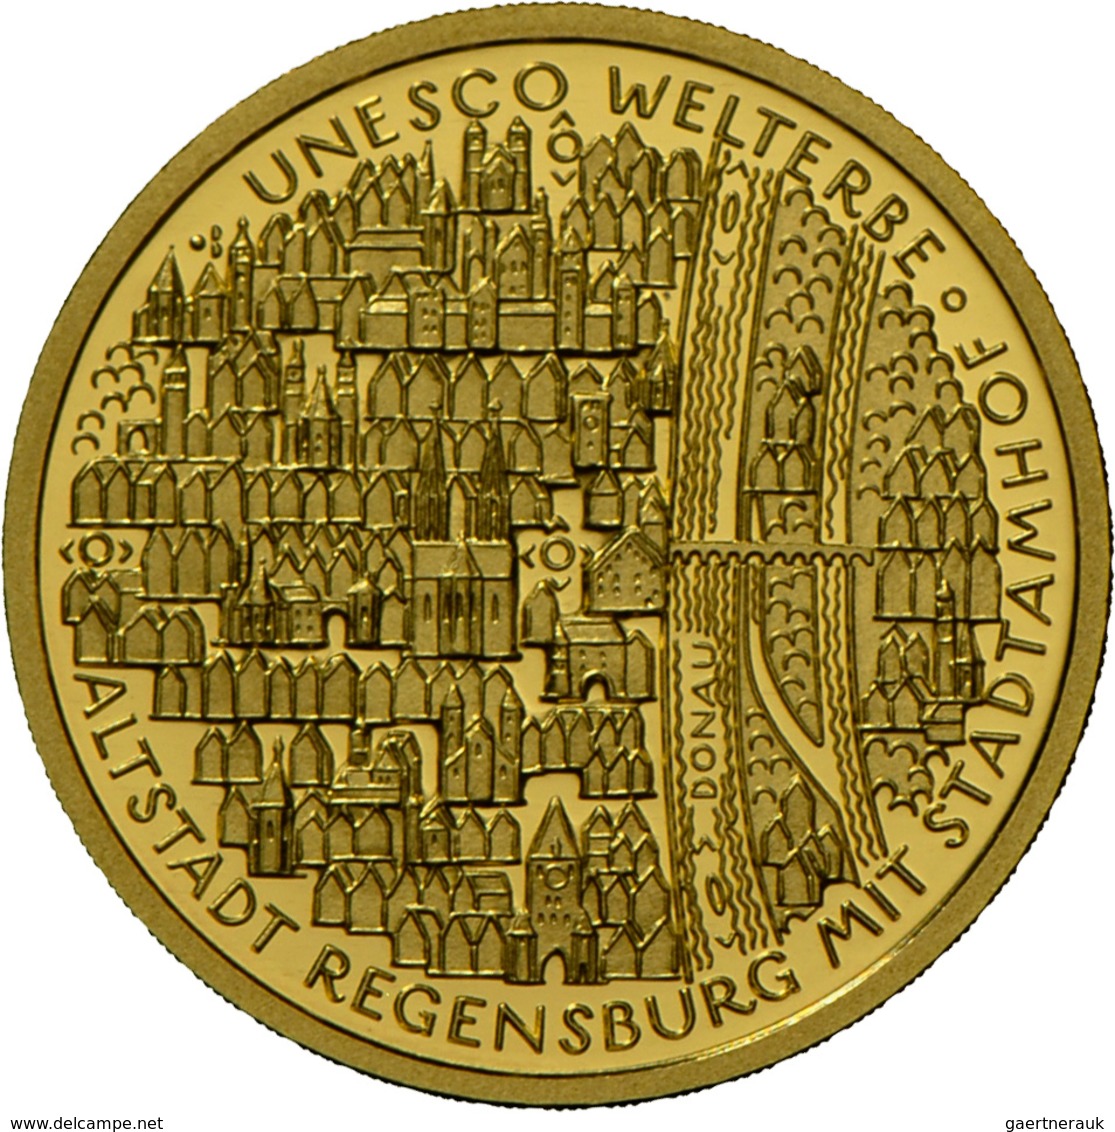 Deutschland - Anlagegold: 5 X 100 Euro 2016 Altstadt Regensburg Mit Stadtamhof (A,D,F,G,J) In Origin - Germania